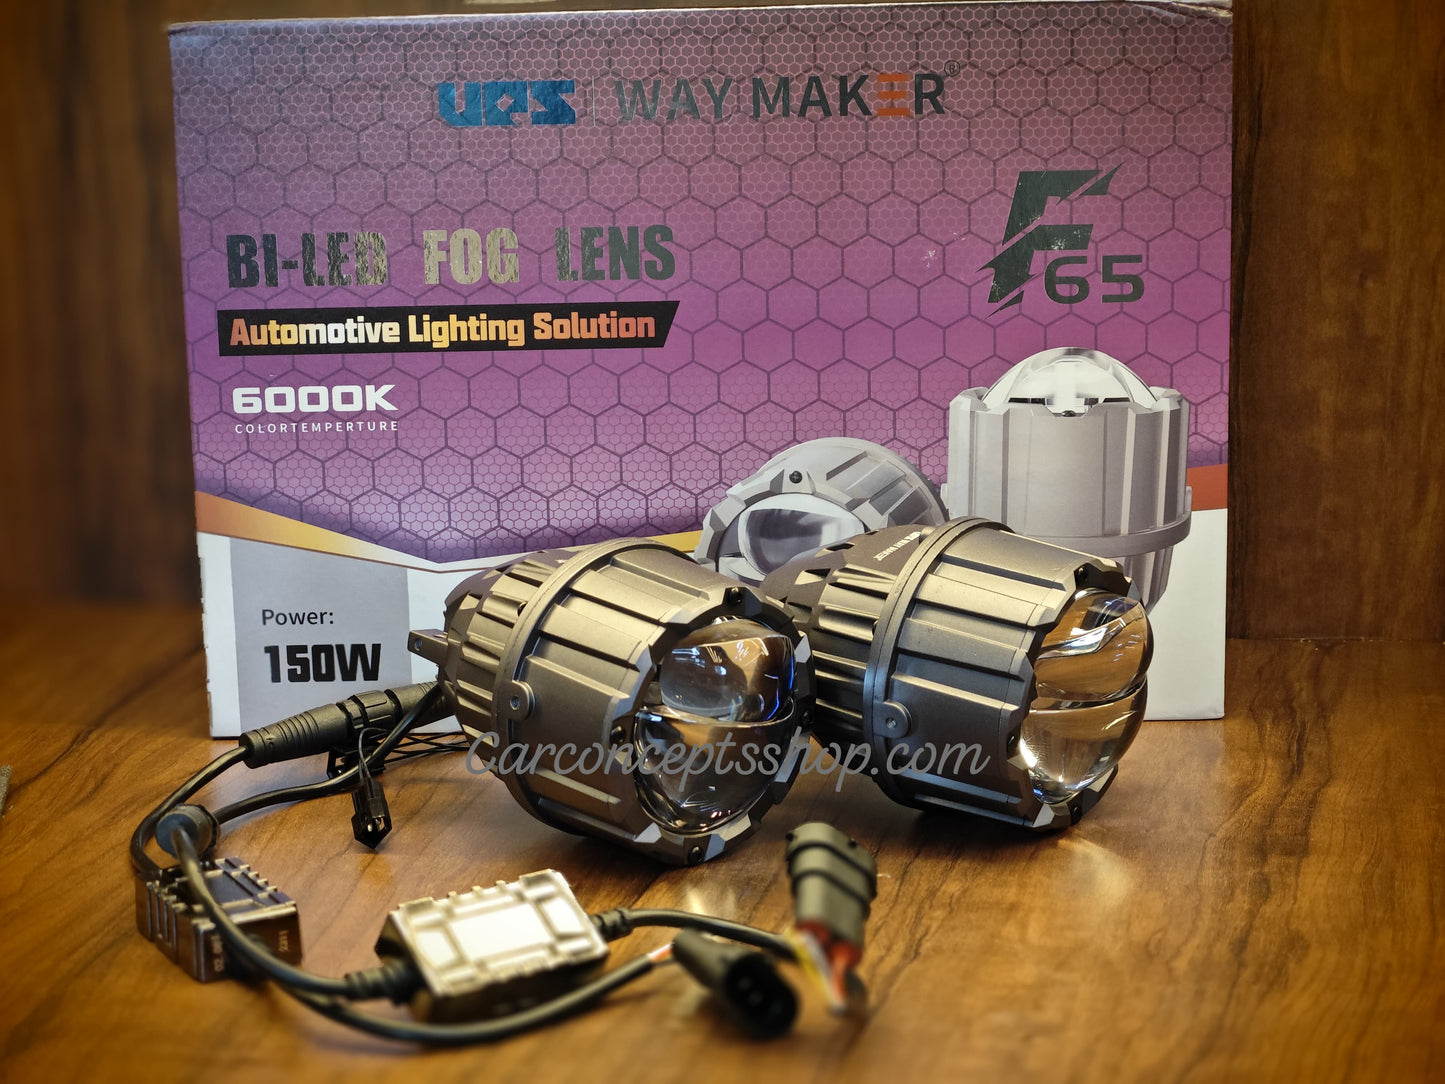 ups way maker F65 bi-led projector fog lens 150watt 6000k